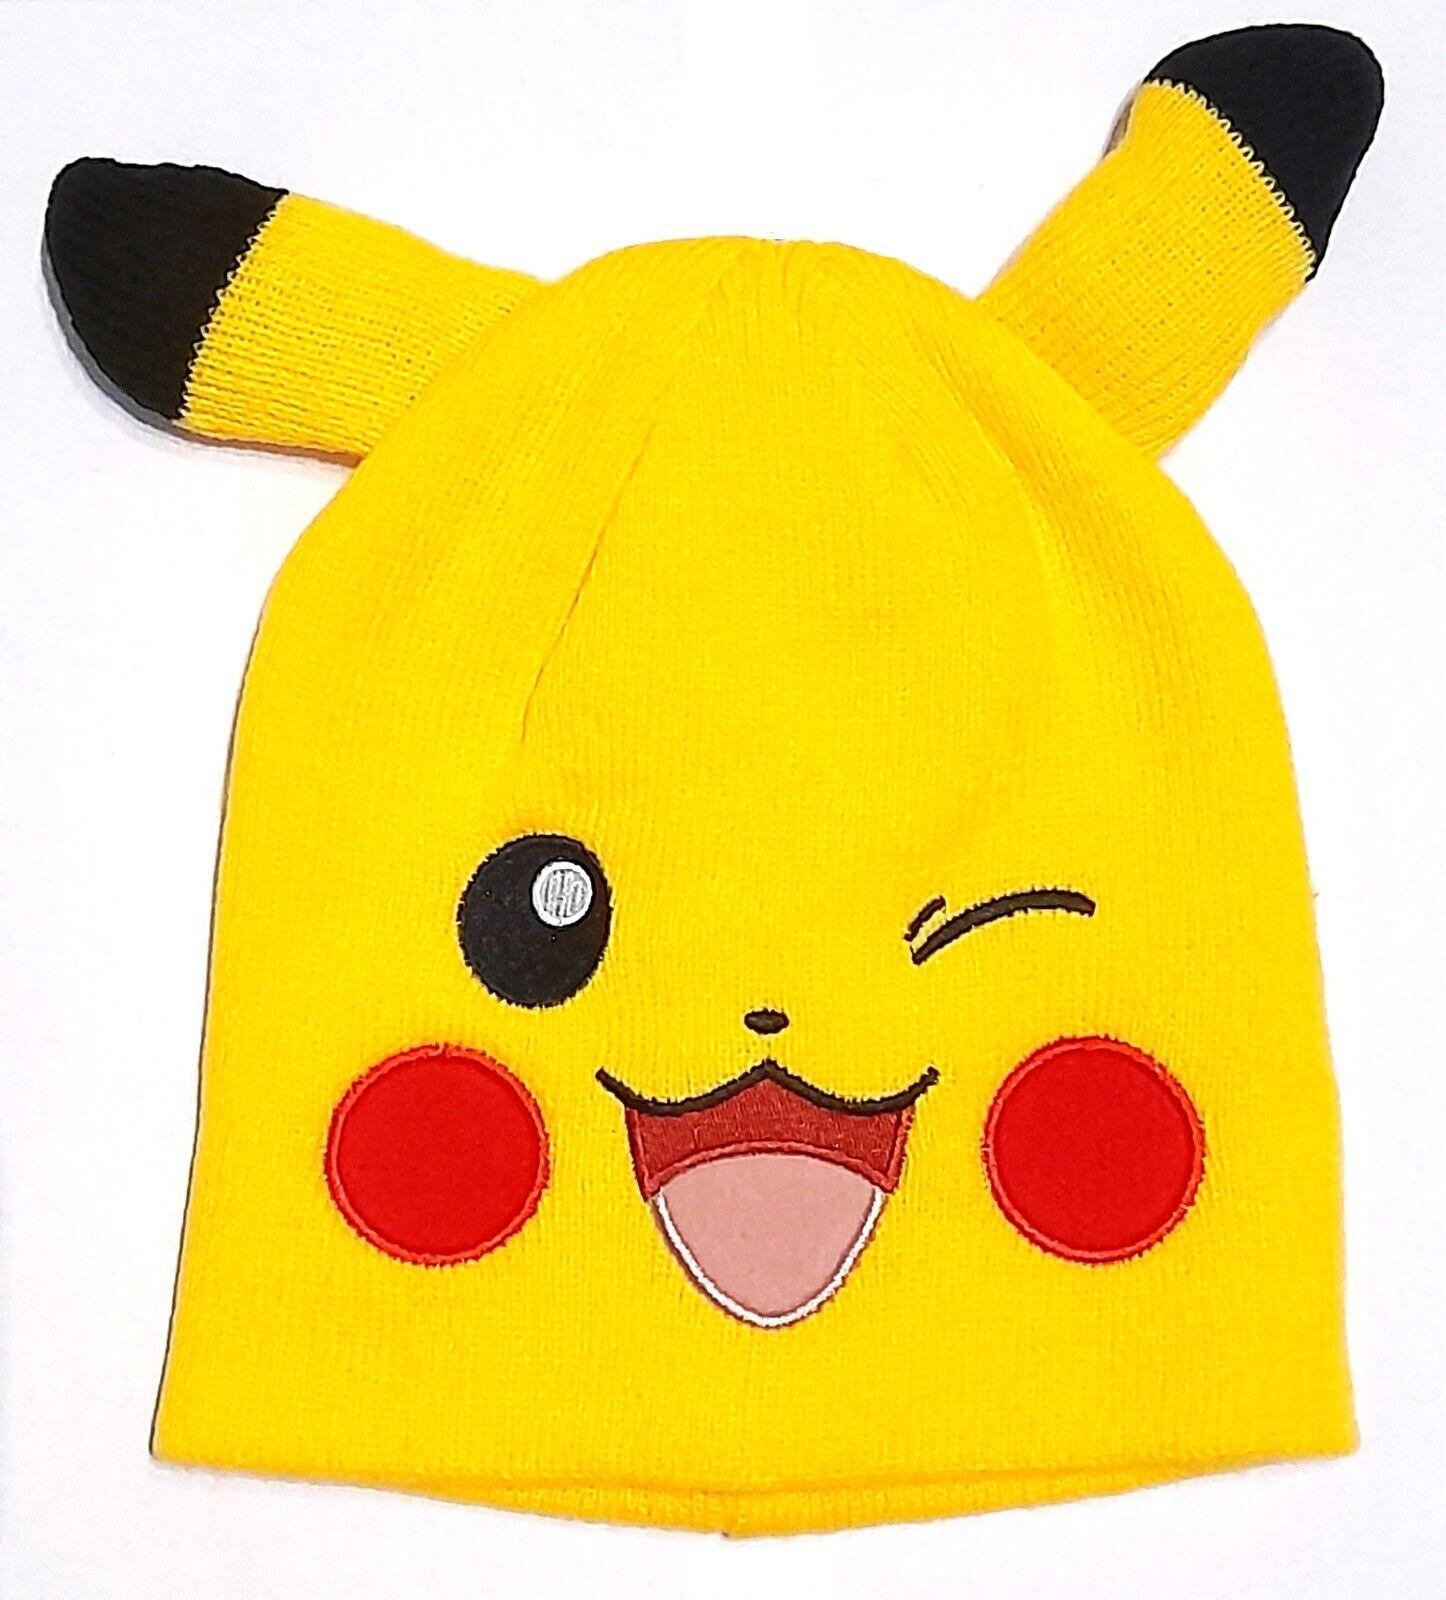 SAZAC Bonnet Kigurumi - Pokemon - Pikachu - Confortable Costume Bonnet  Bonnet - Taille adulte, jaune